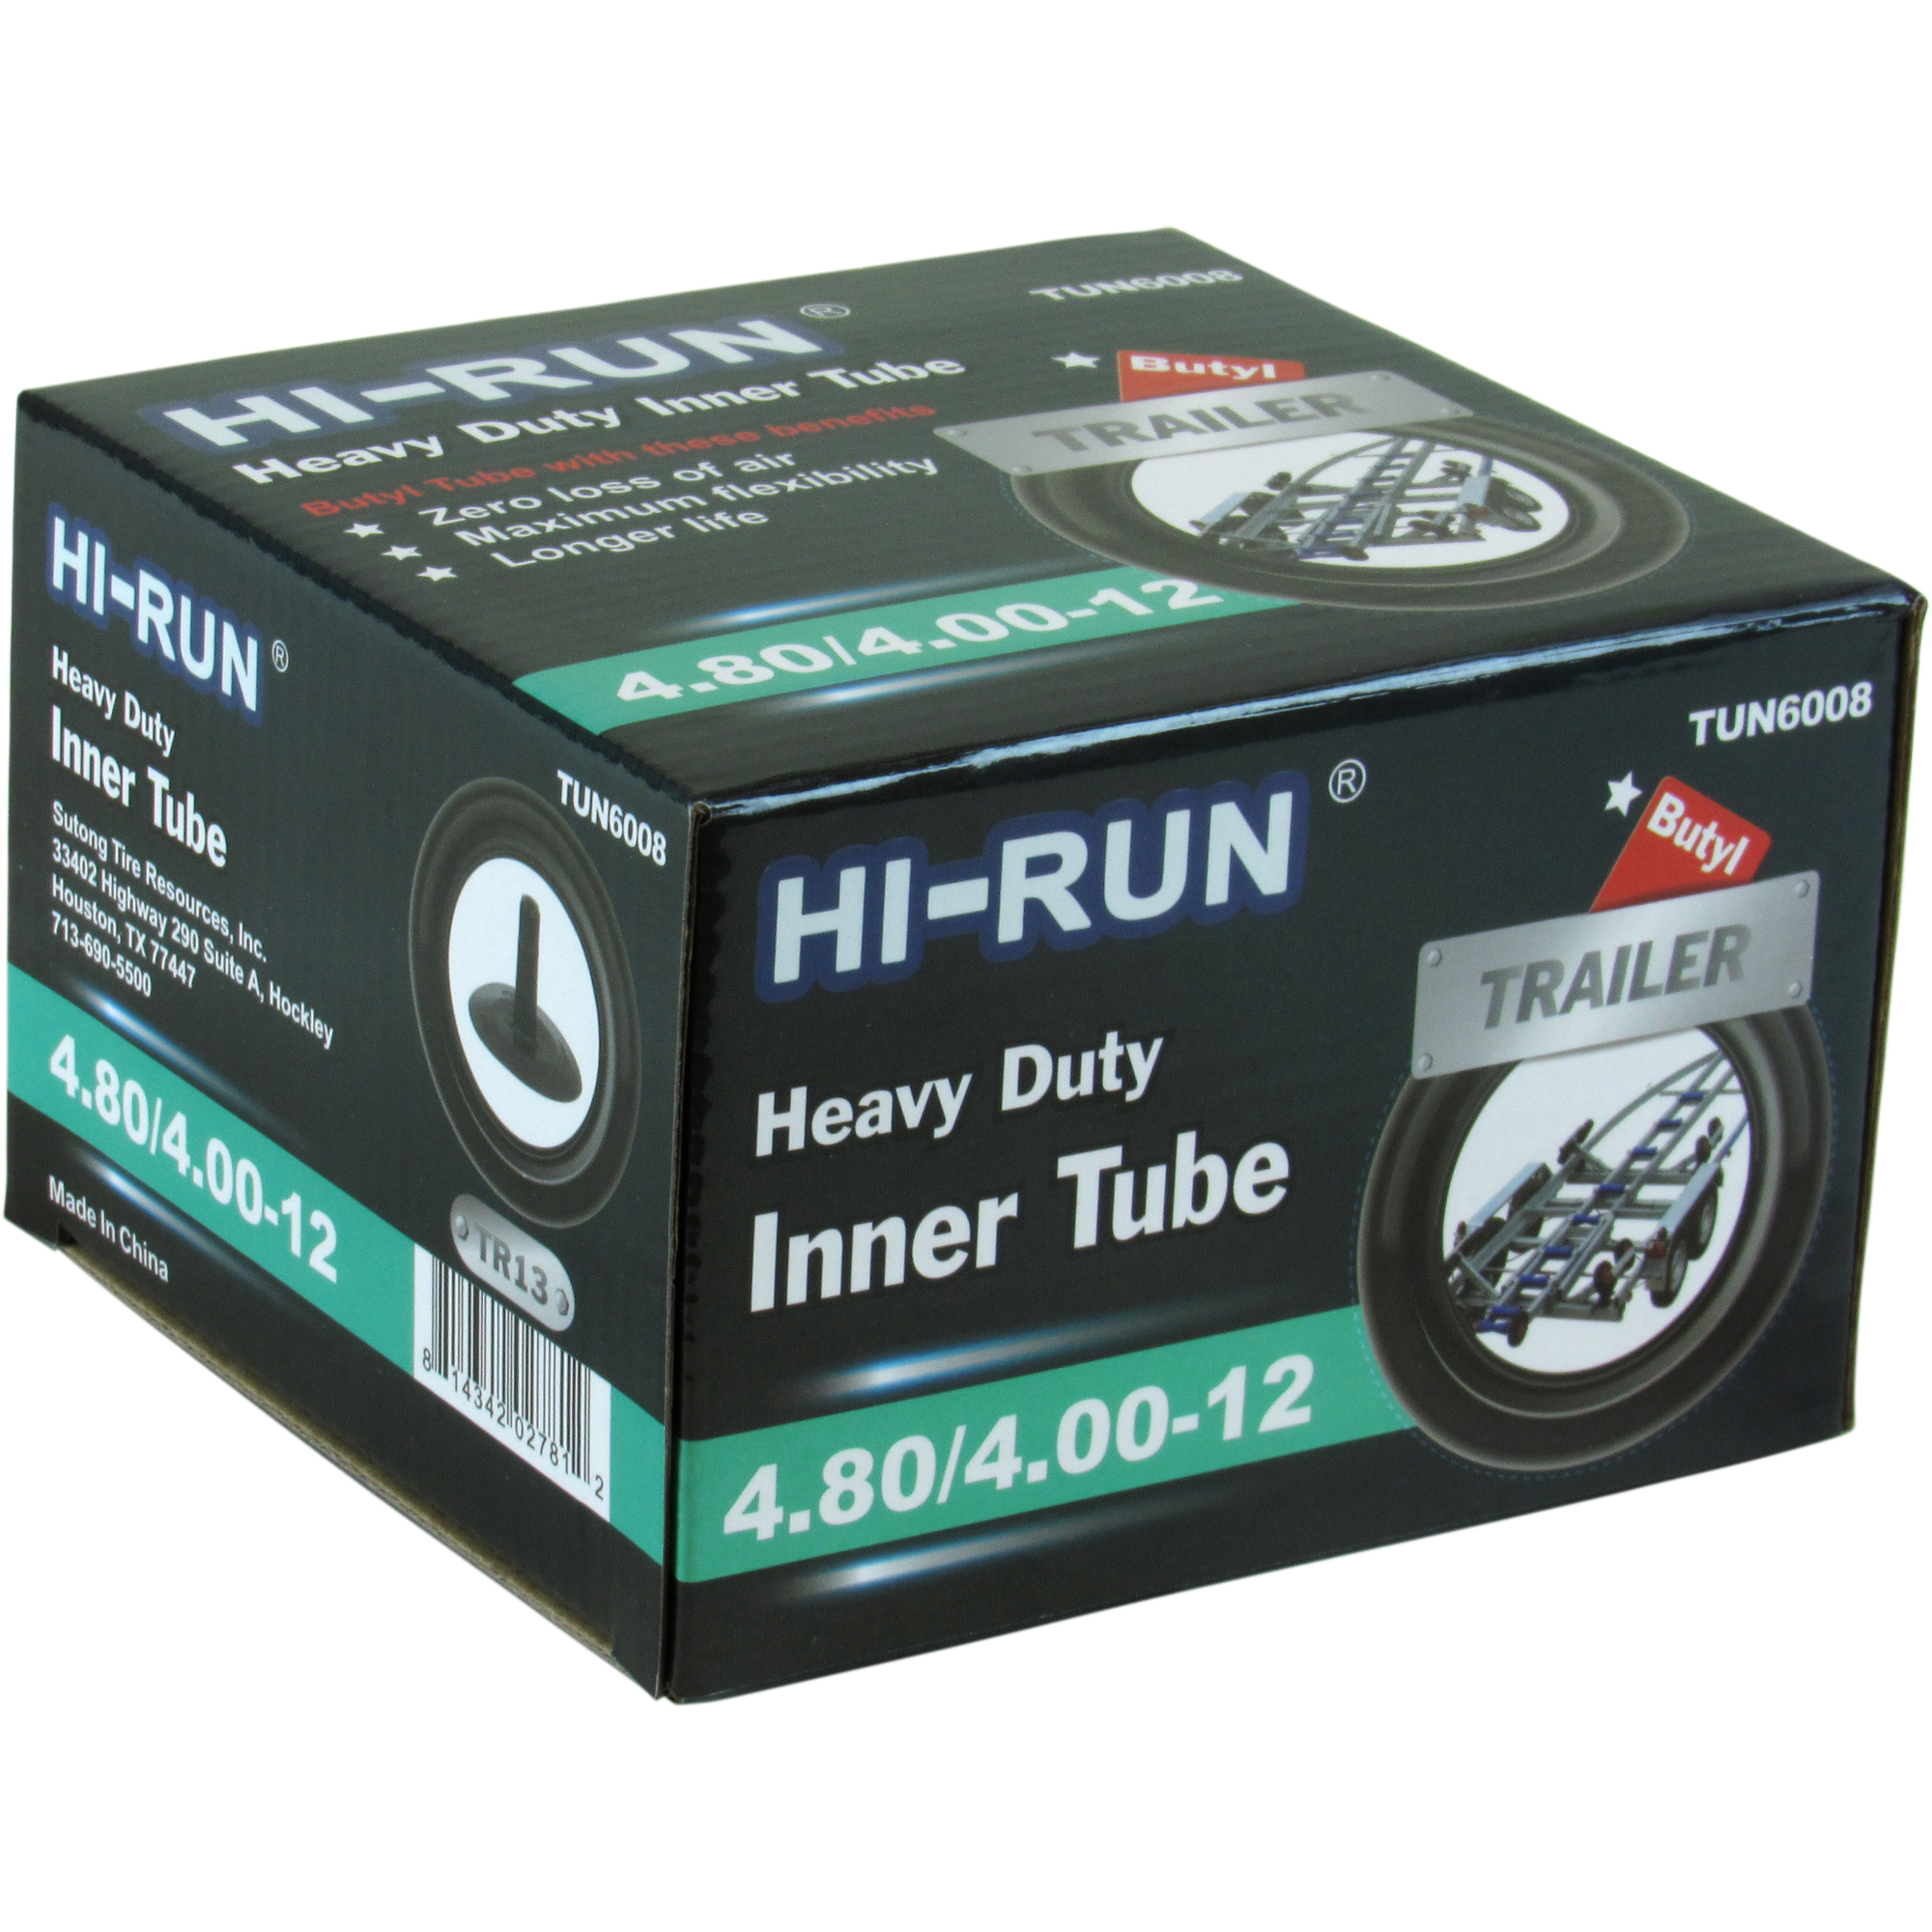 HI-RUN, Tube 4.80/4.00-12 (TR13) Trailer, Fits Rim Size 12 in, Included (qty.) 1 Model TUN6008